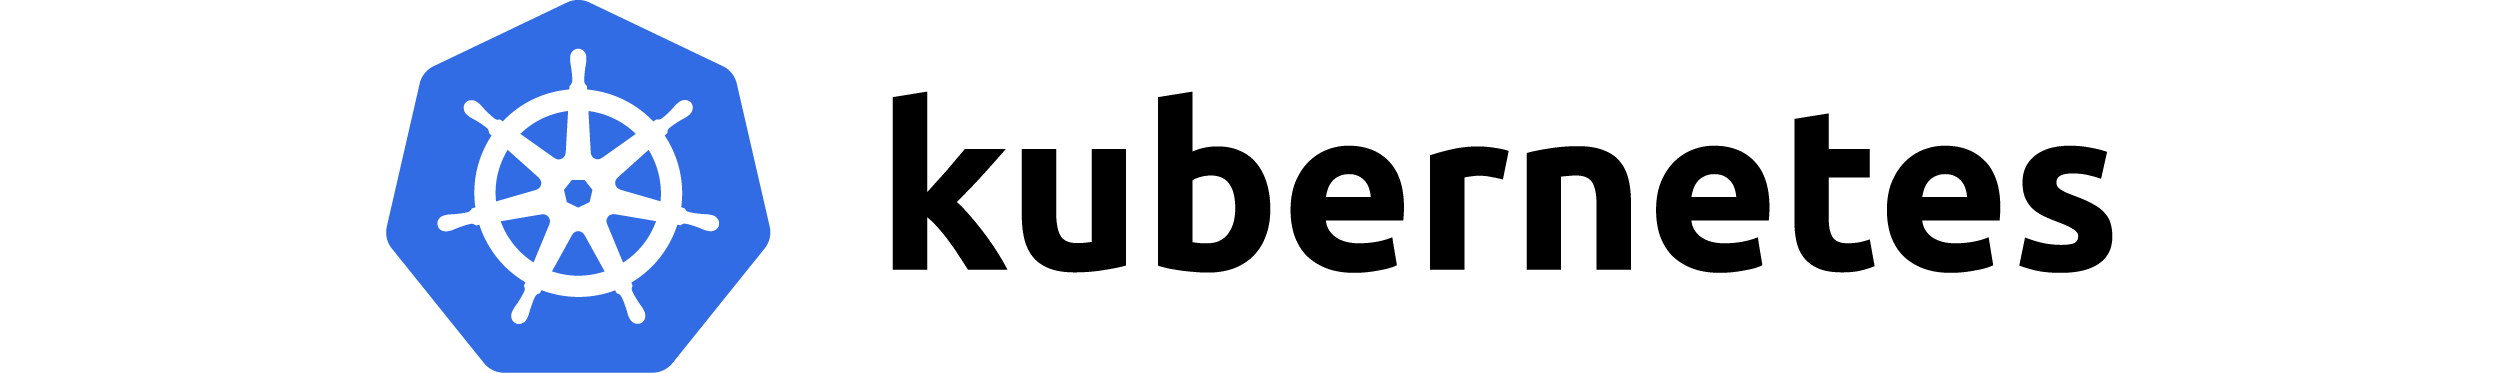 Kubernetes Logo Download Vect